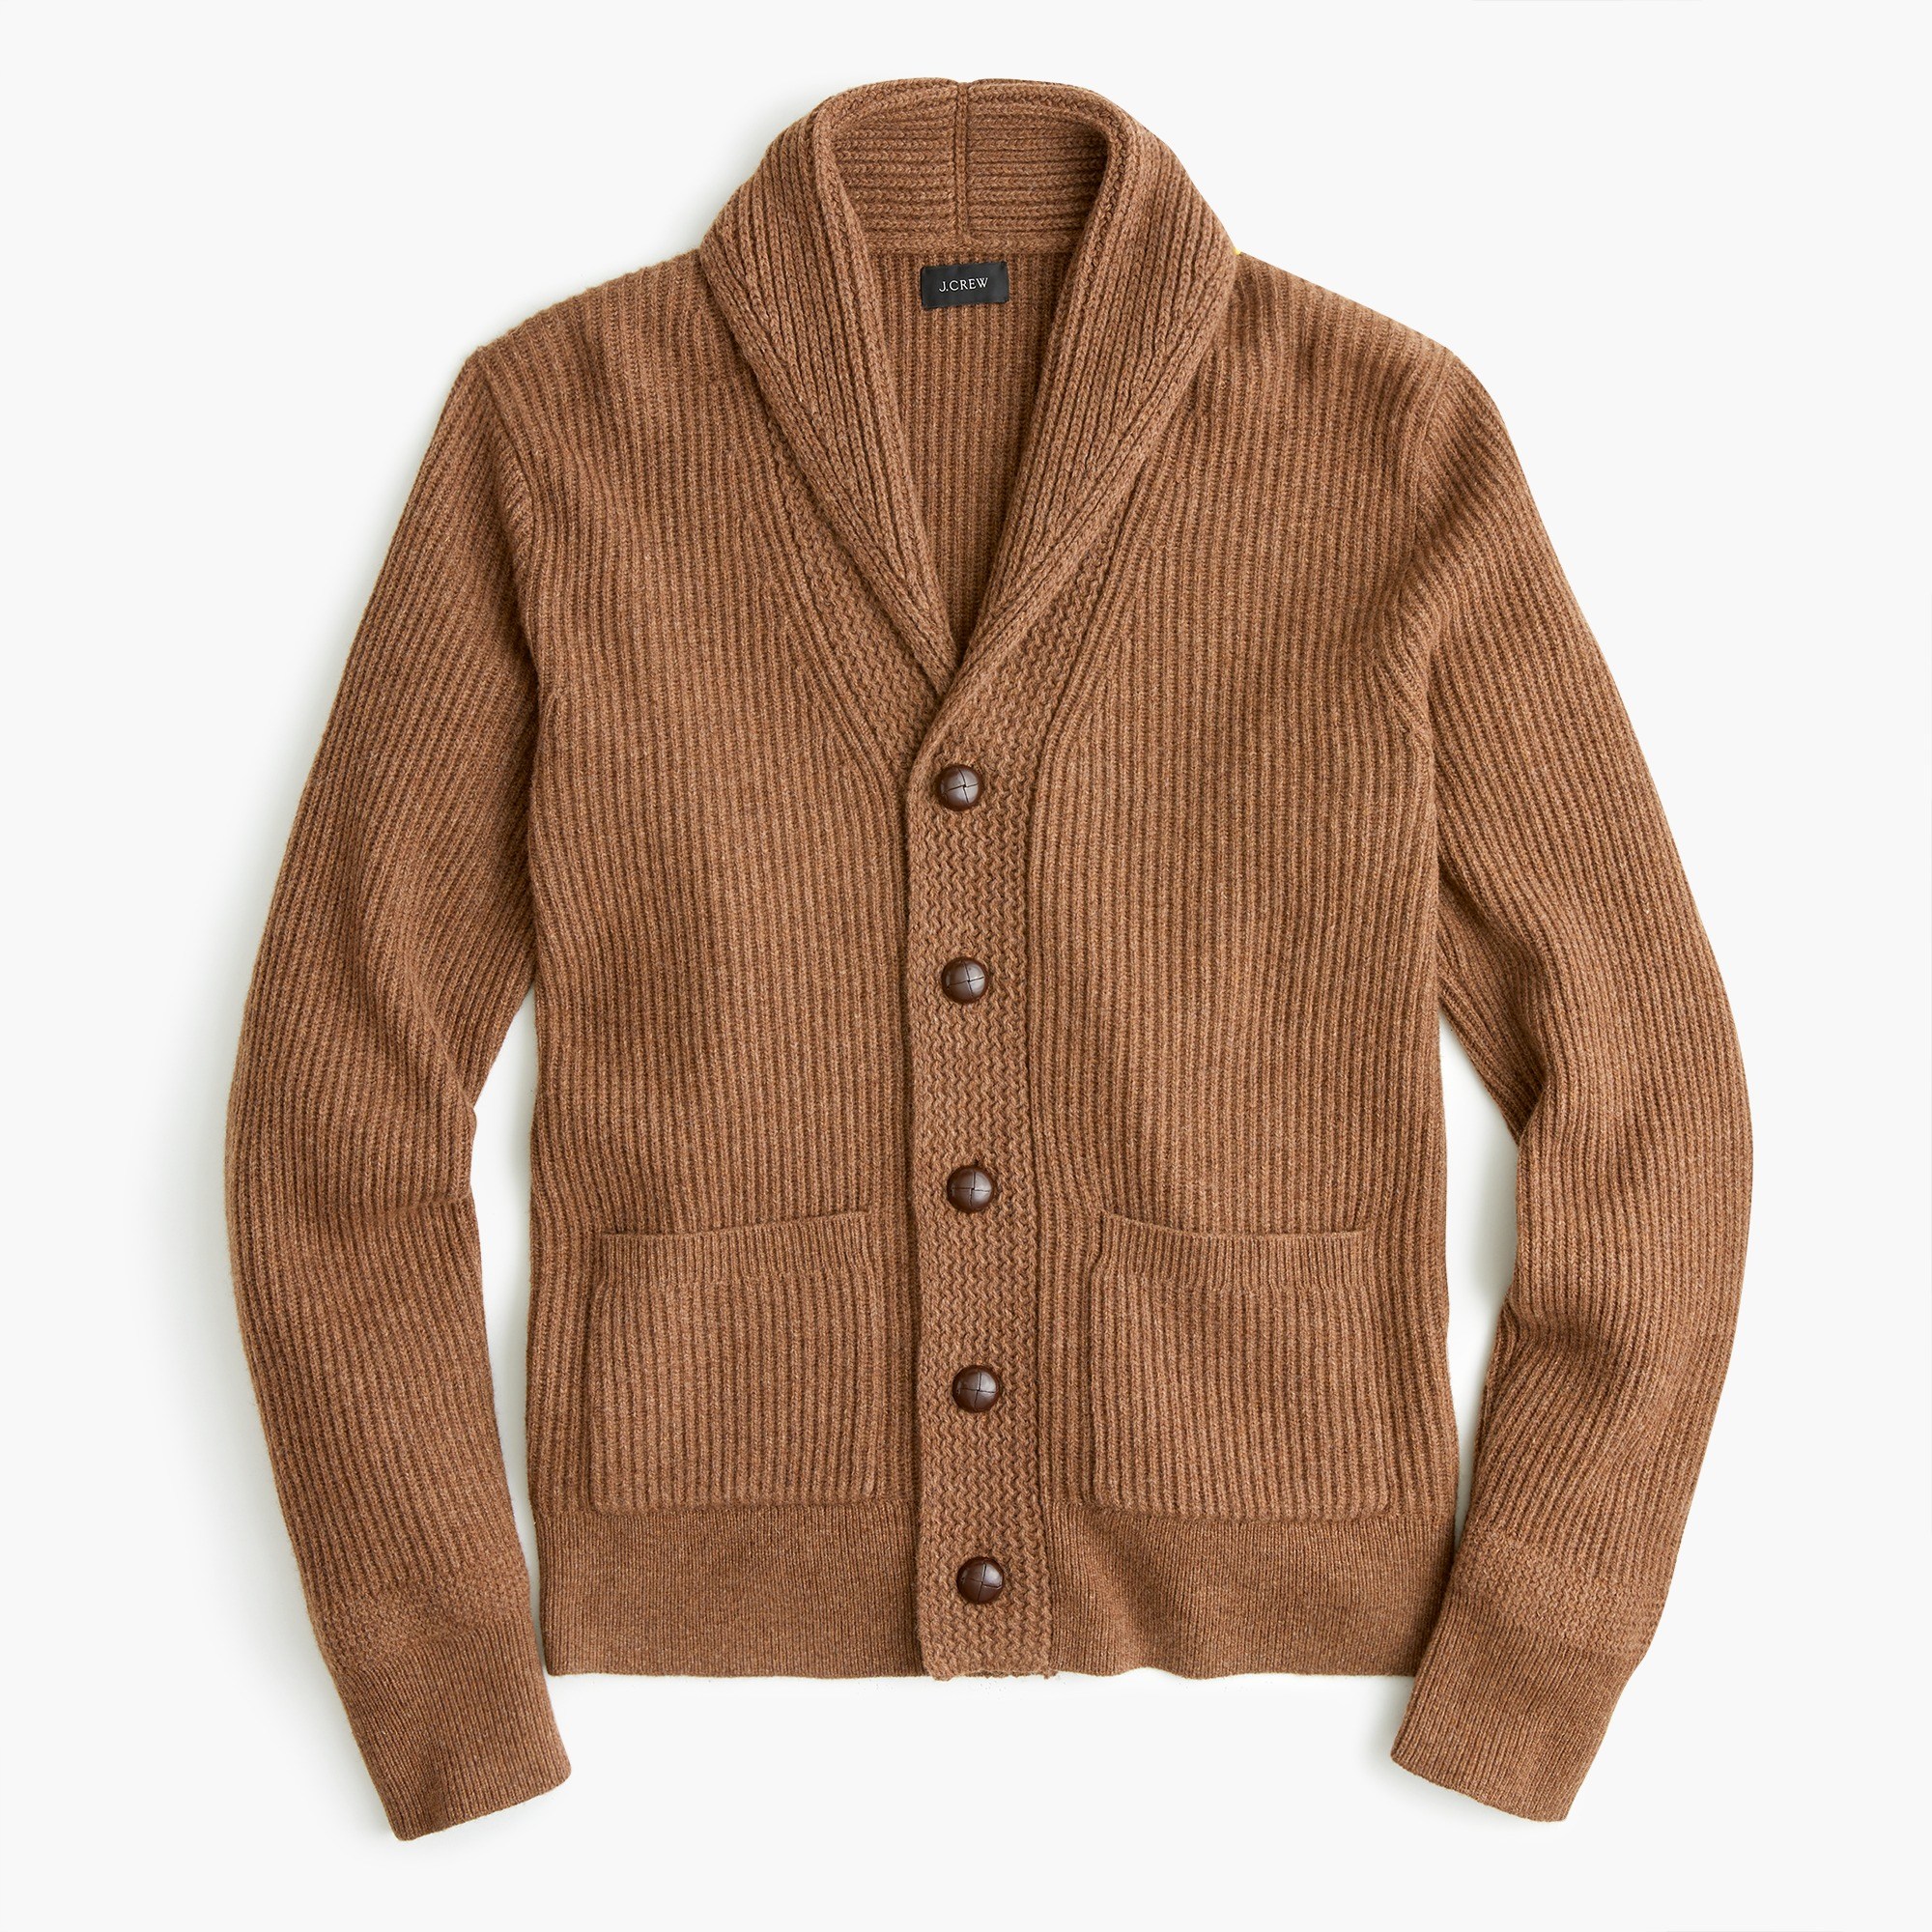 Rugged merino wool shawl-collar cardigan sweater : Men cardigan | J.Crew